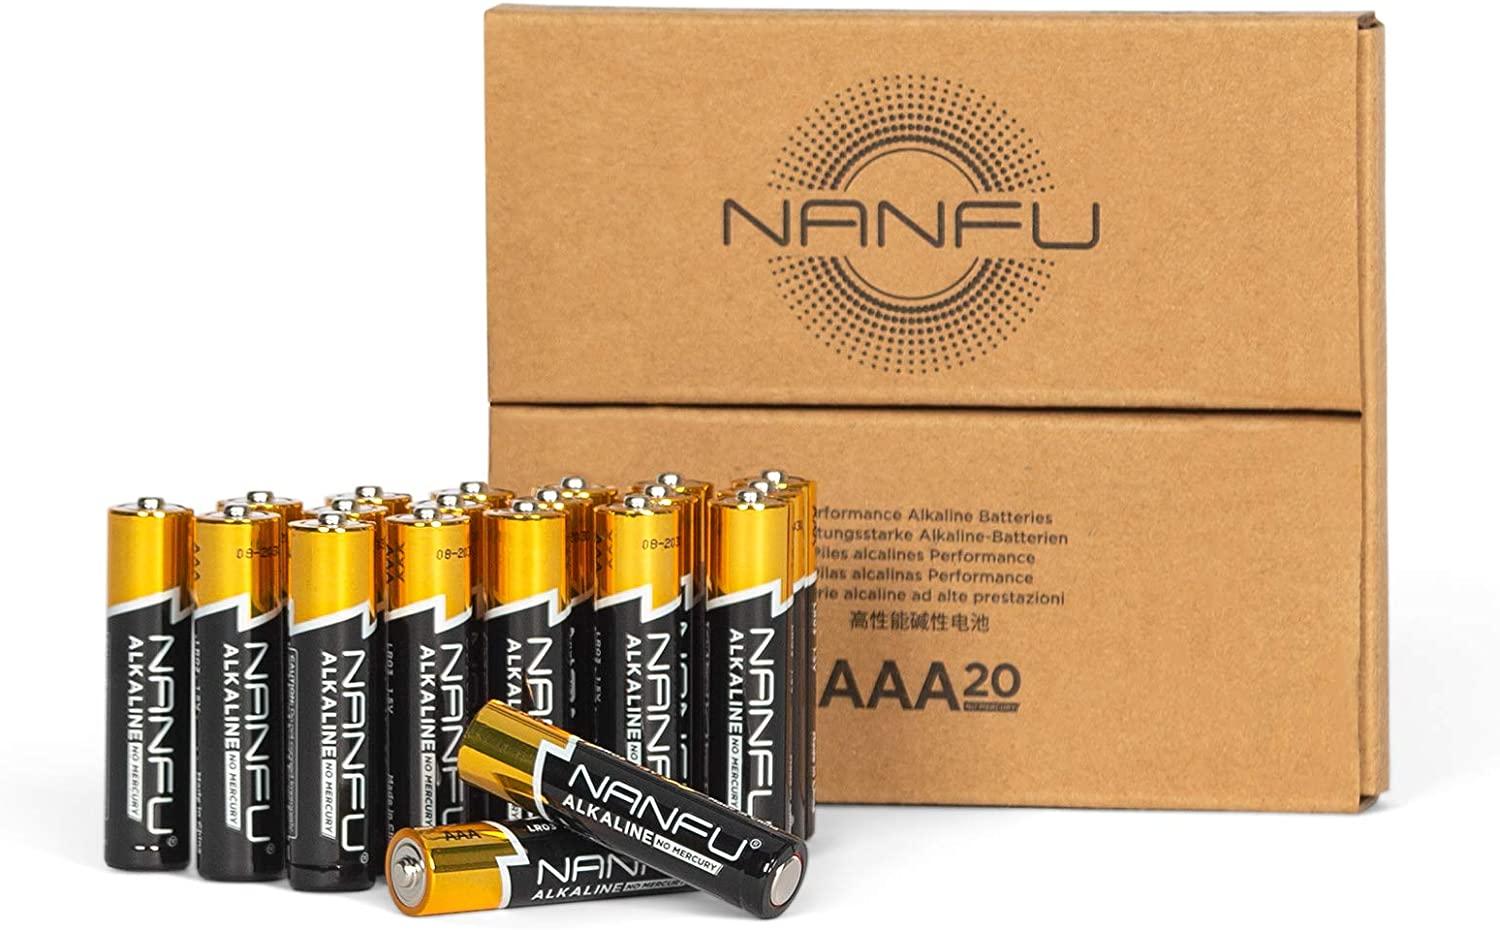 20 Nanfu AAA Alkaline Batteries for $4.54 Shipped